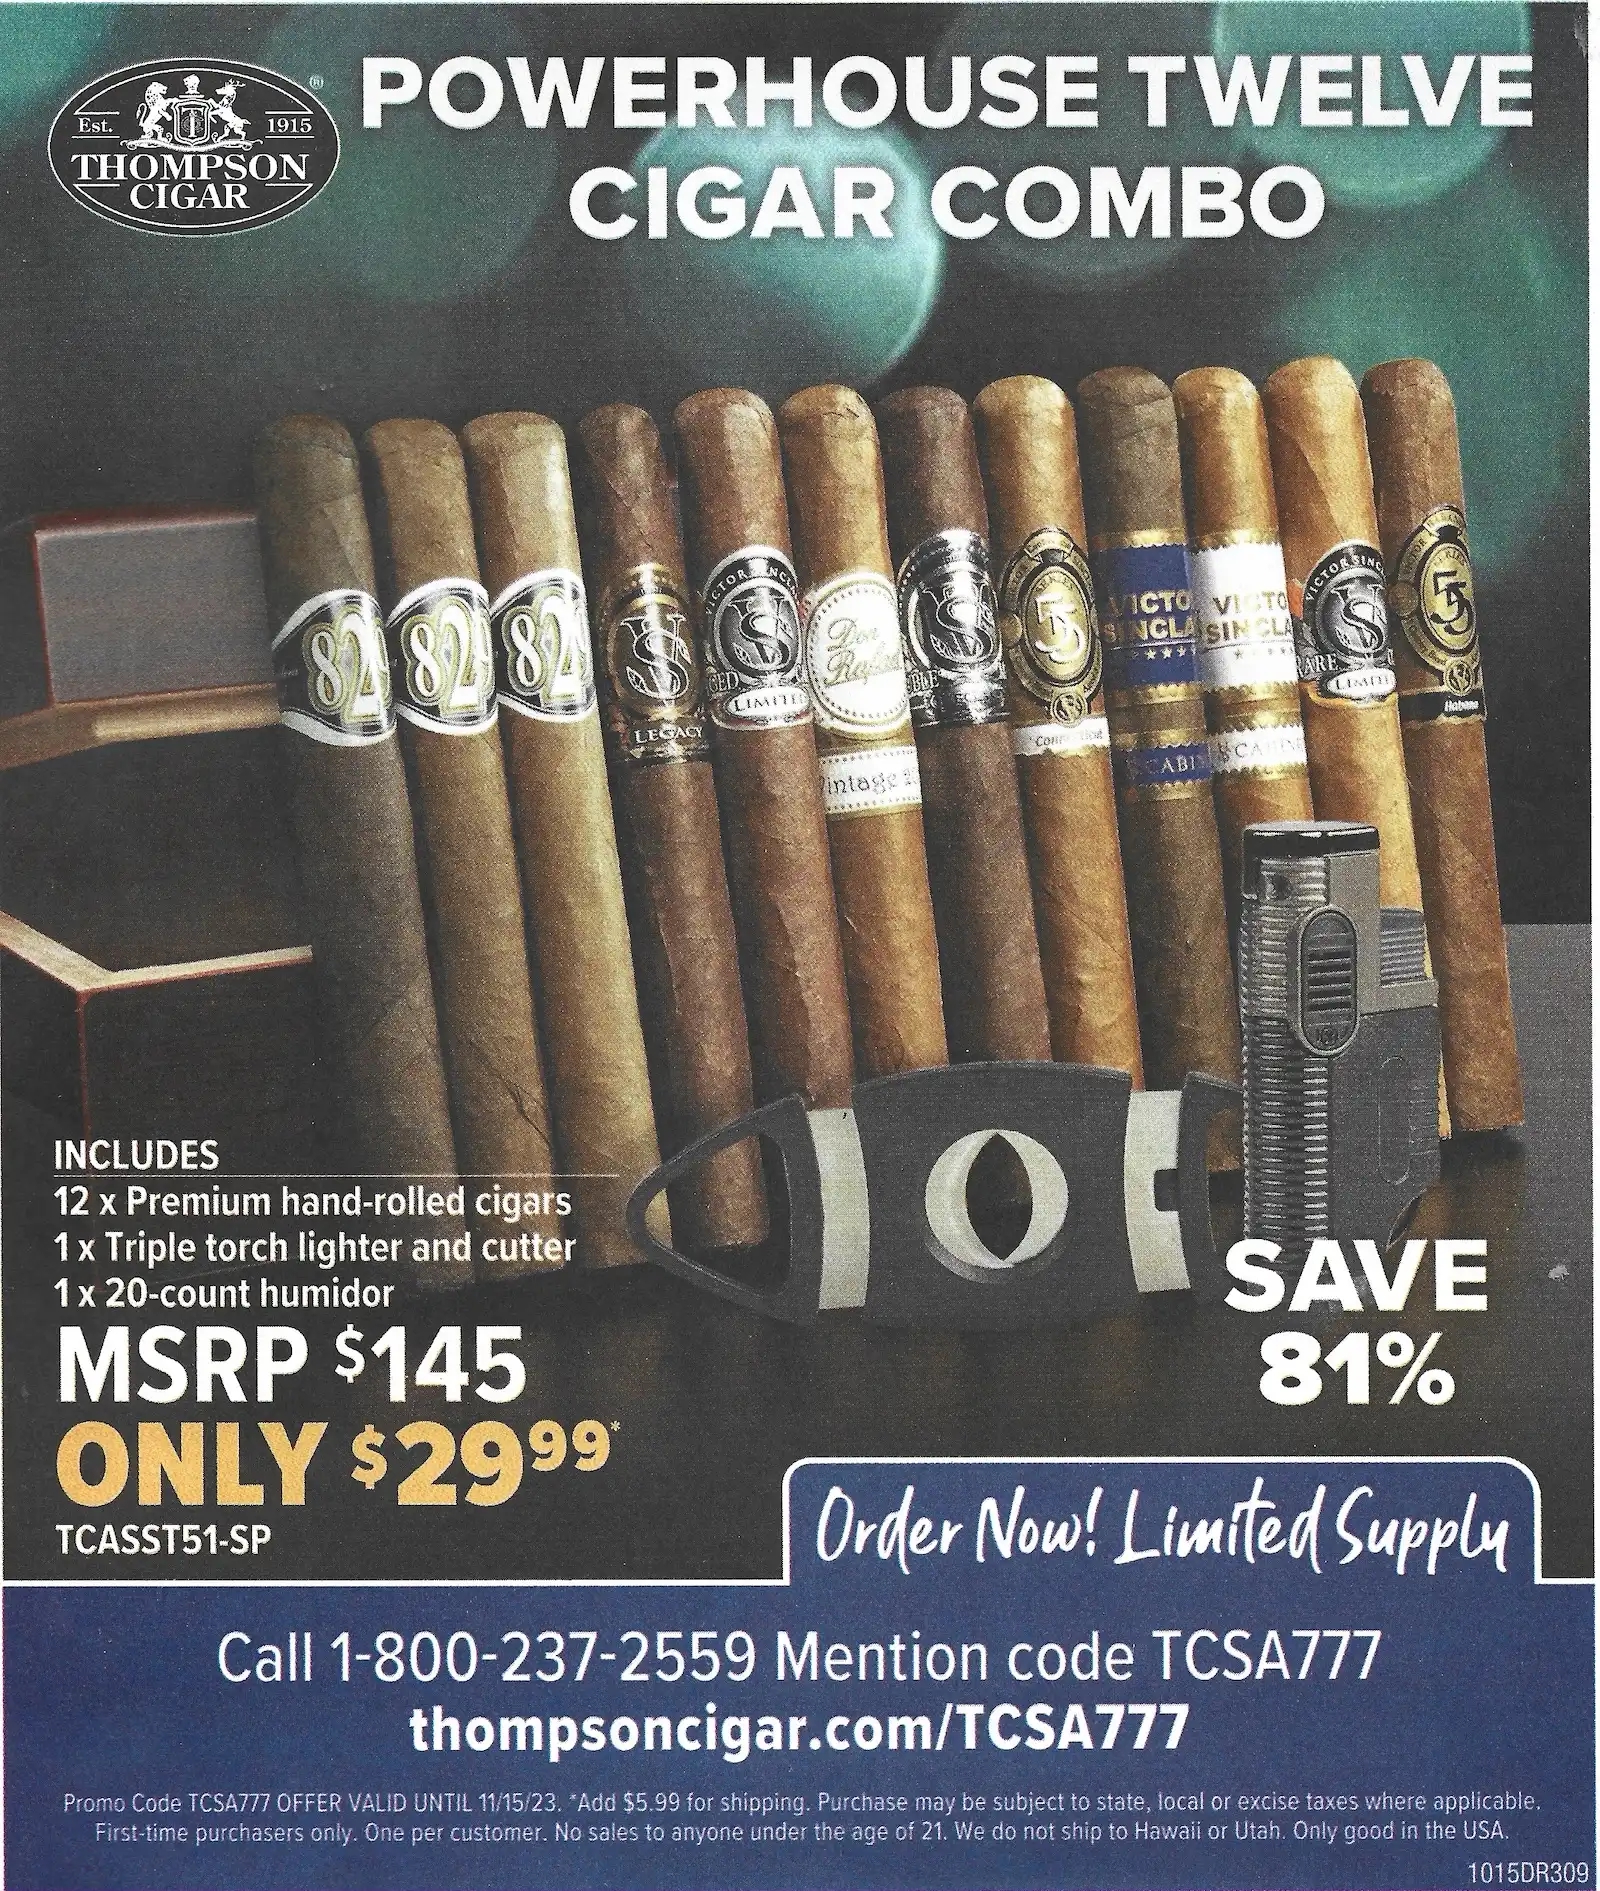 Thompson Cigar Promo Code: Powerhouse Twelve Cigar Combo - Expires 11/15/2023